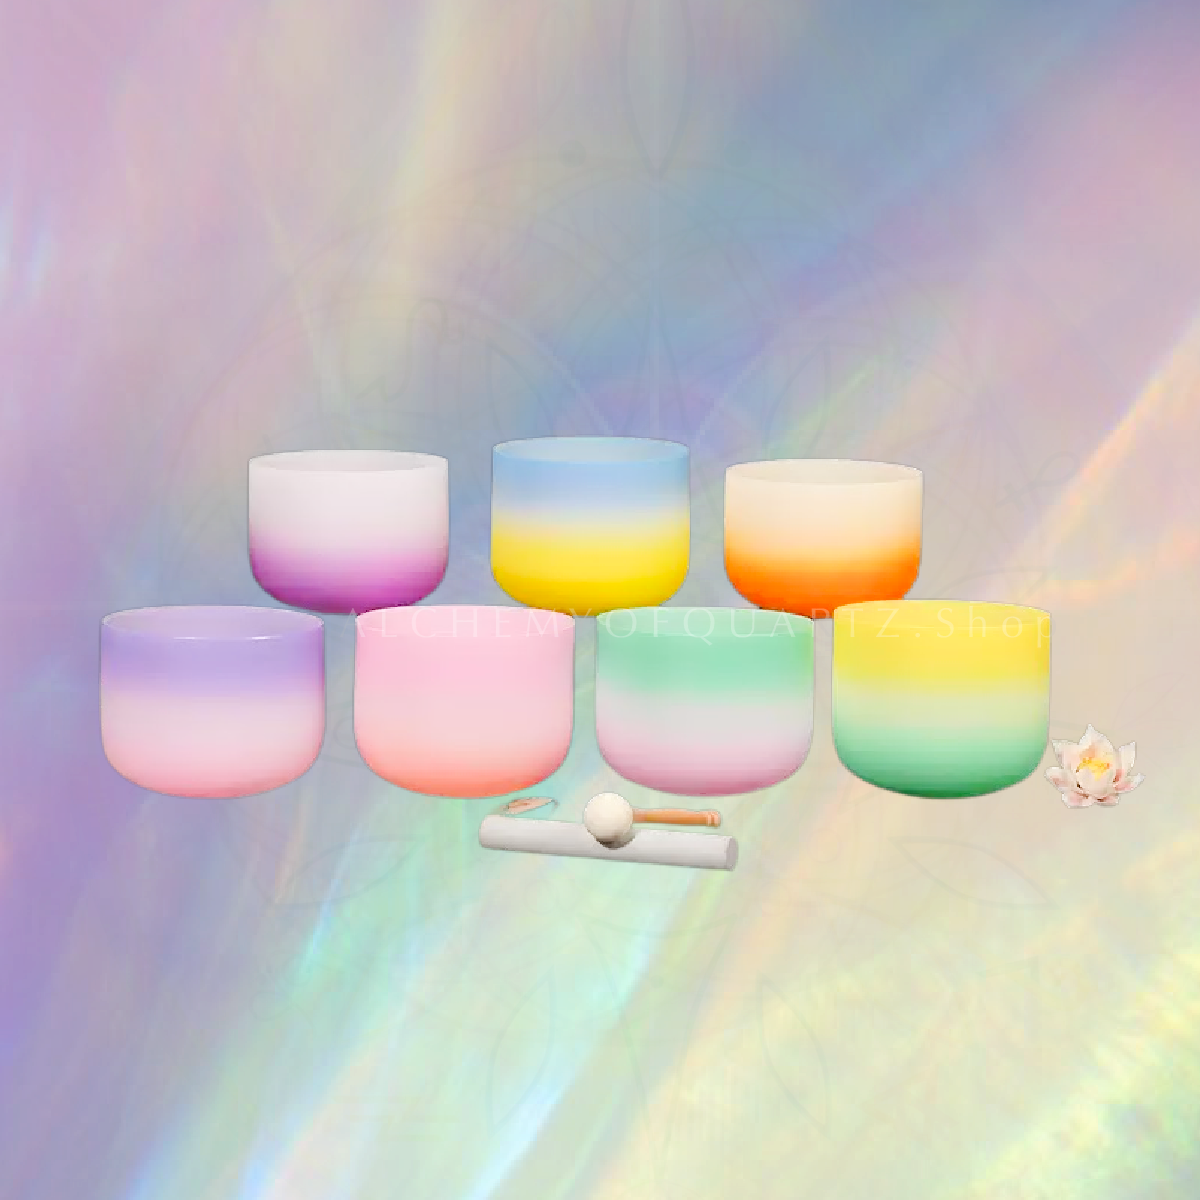 7pc Frosted Rainbow Quartz Singing Bowl ✸ 6” to 12” | 432hz or 440hz - Alchemy of Quartz 